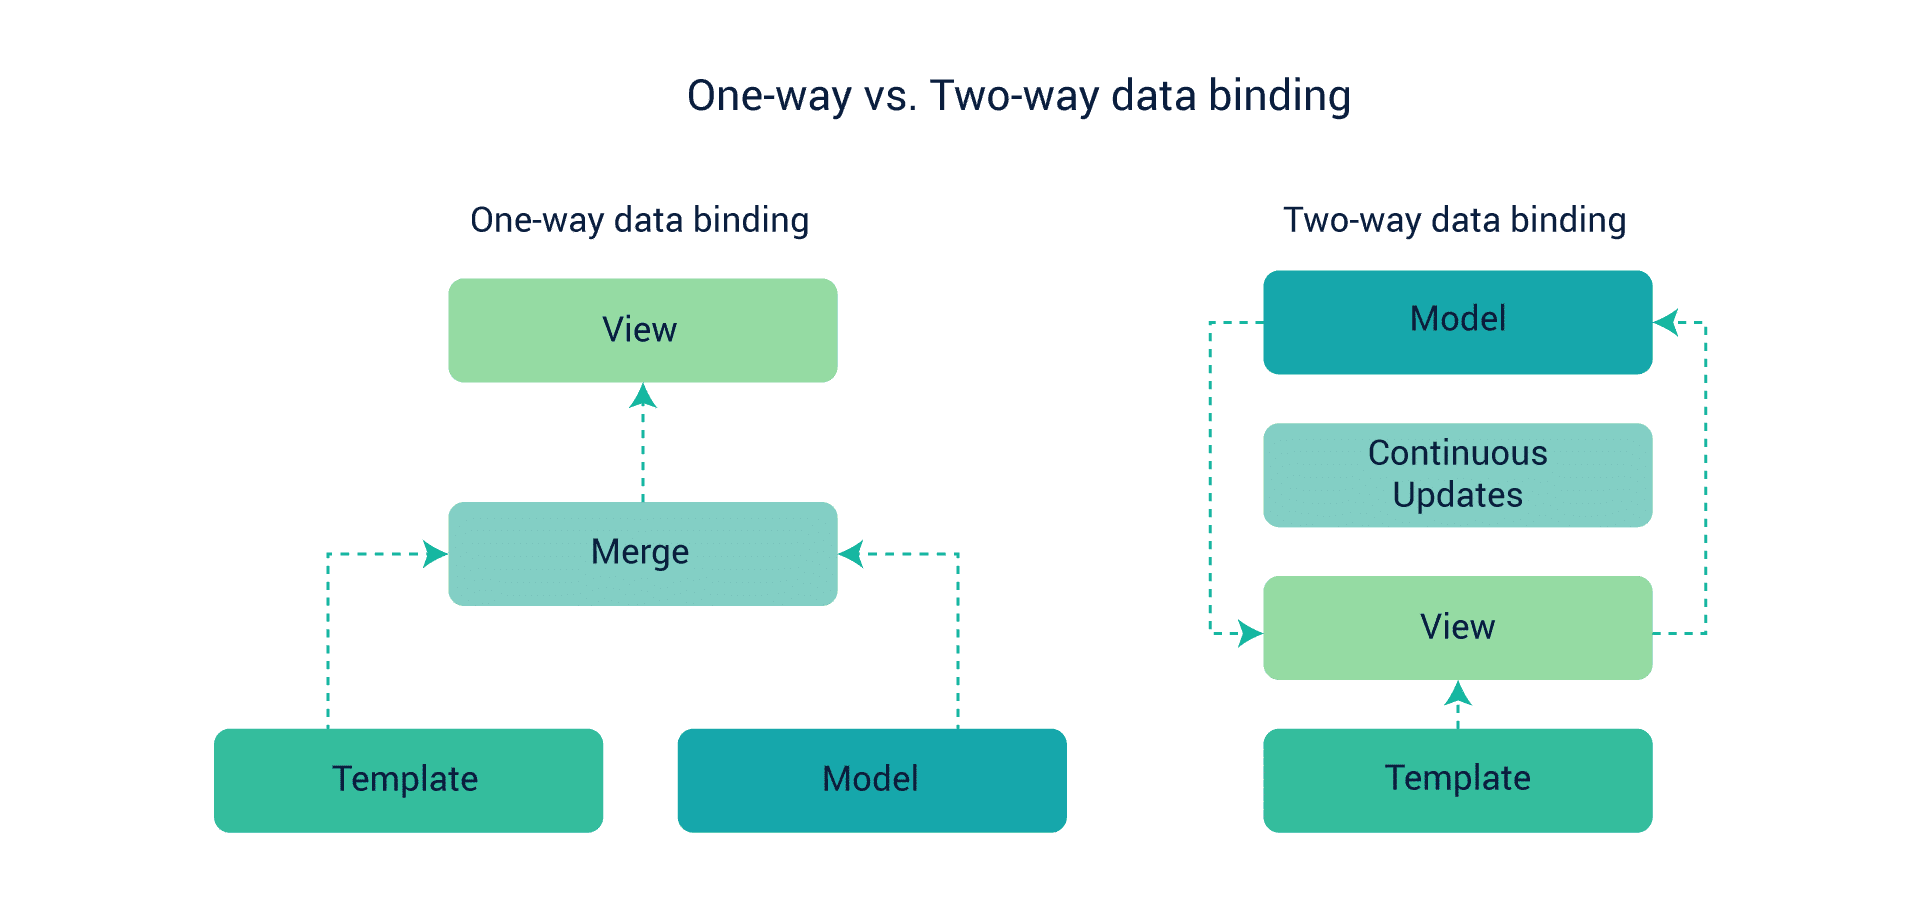 One way data binding vs Two way data binding